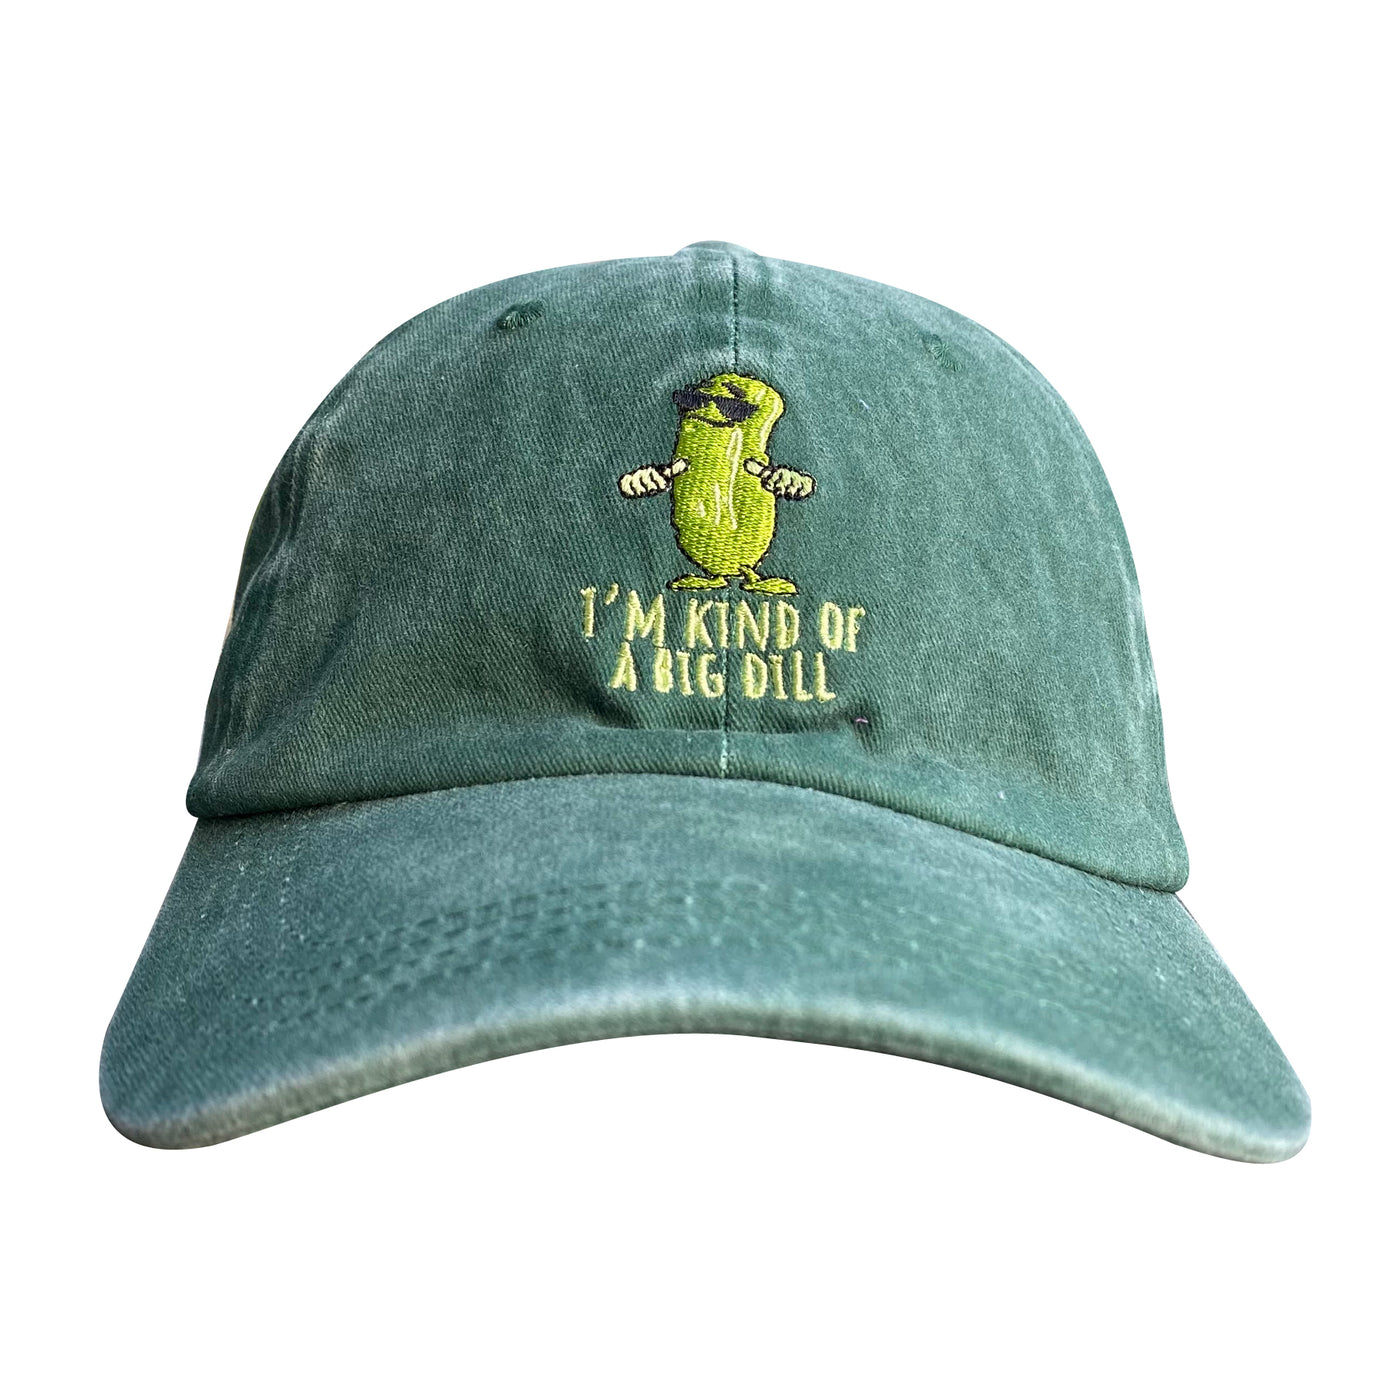 Big Dill Classic Hat